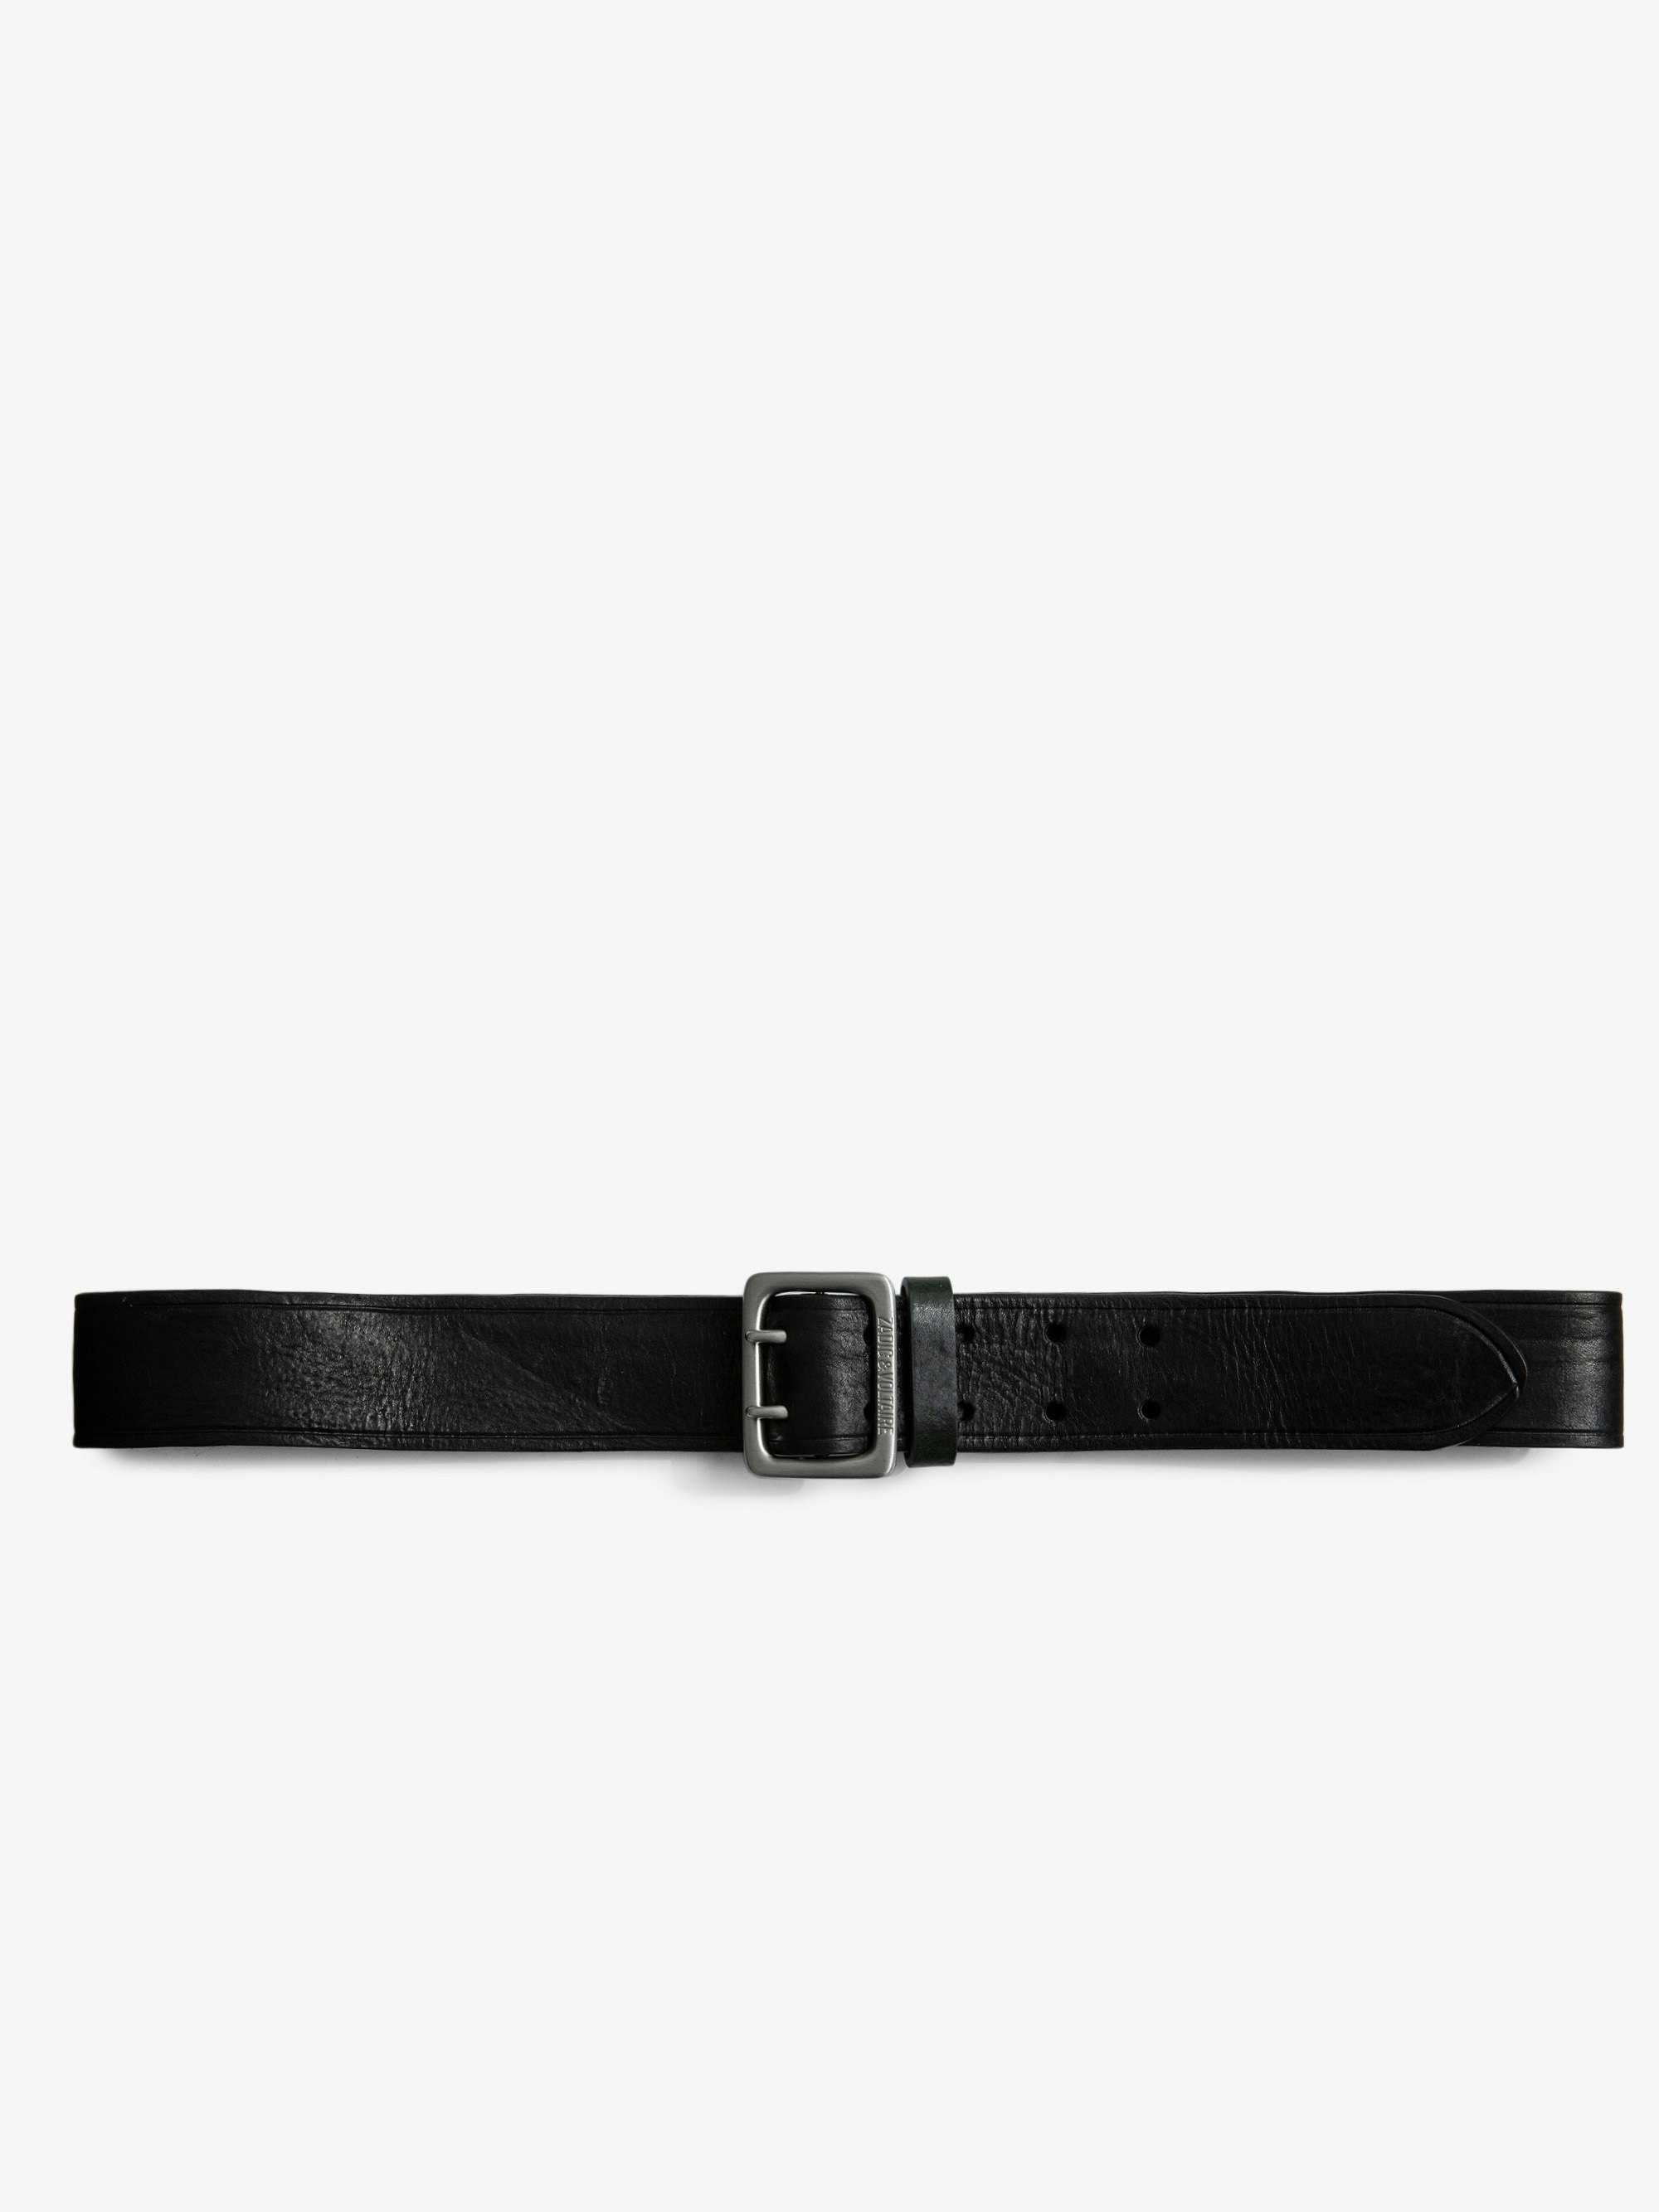 Buckley Belt - Men's black leather belt with silver buckle